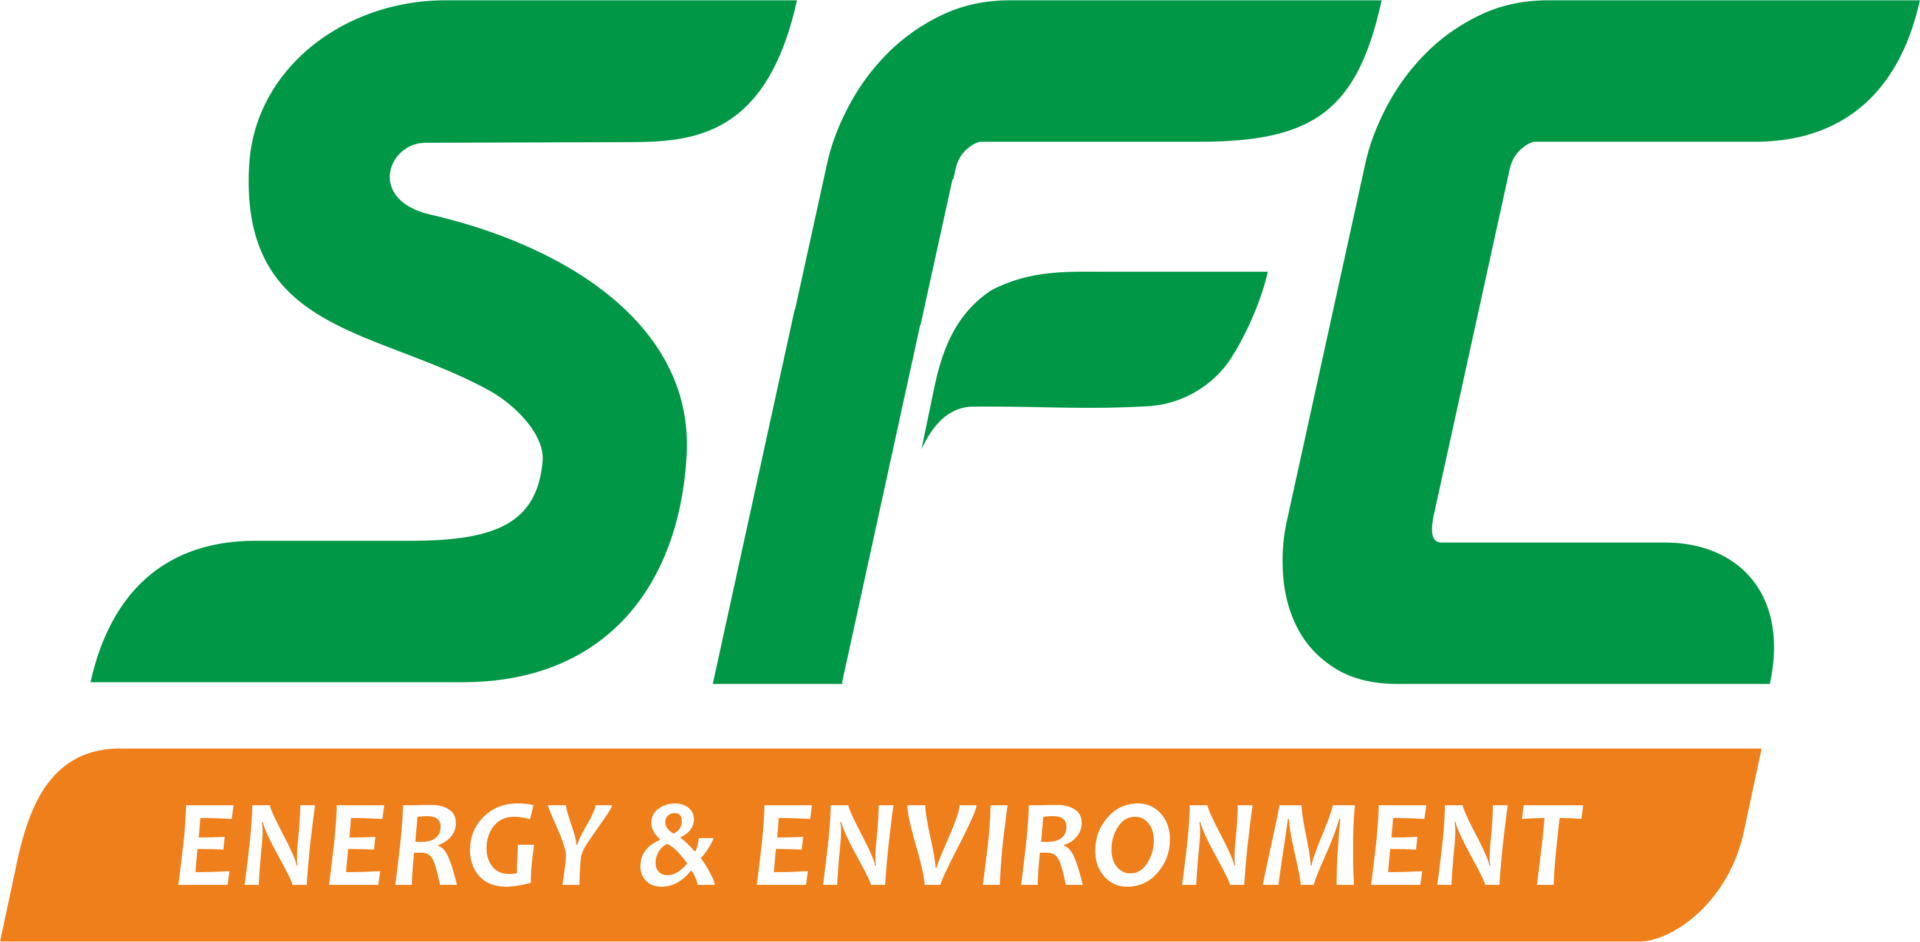 SFC Environmental Technologies